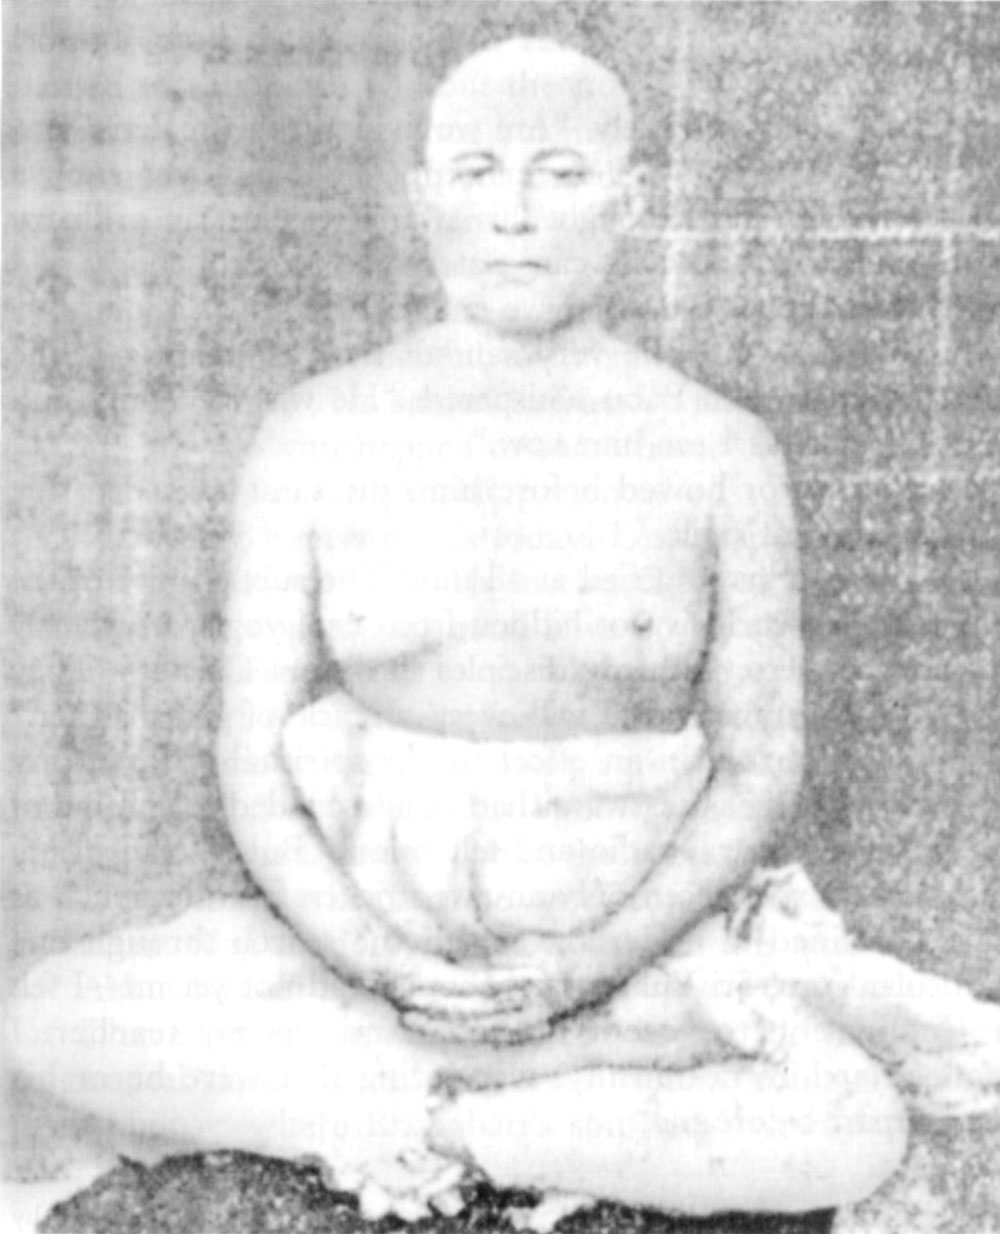 Autobiography of a Yogi, by Paramhansa Yogananda - Free, Original